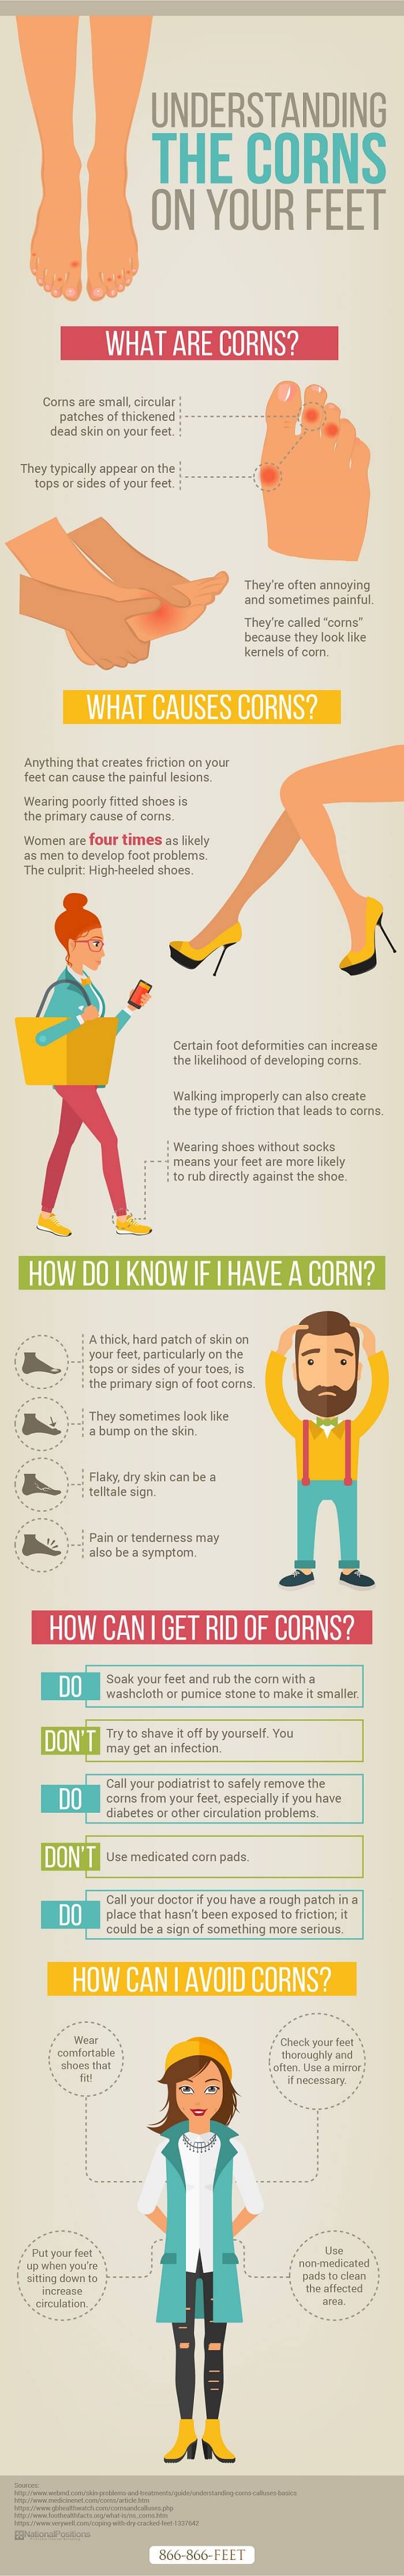 get rid of corns on feet